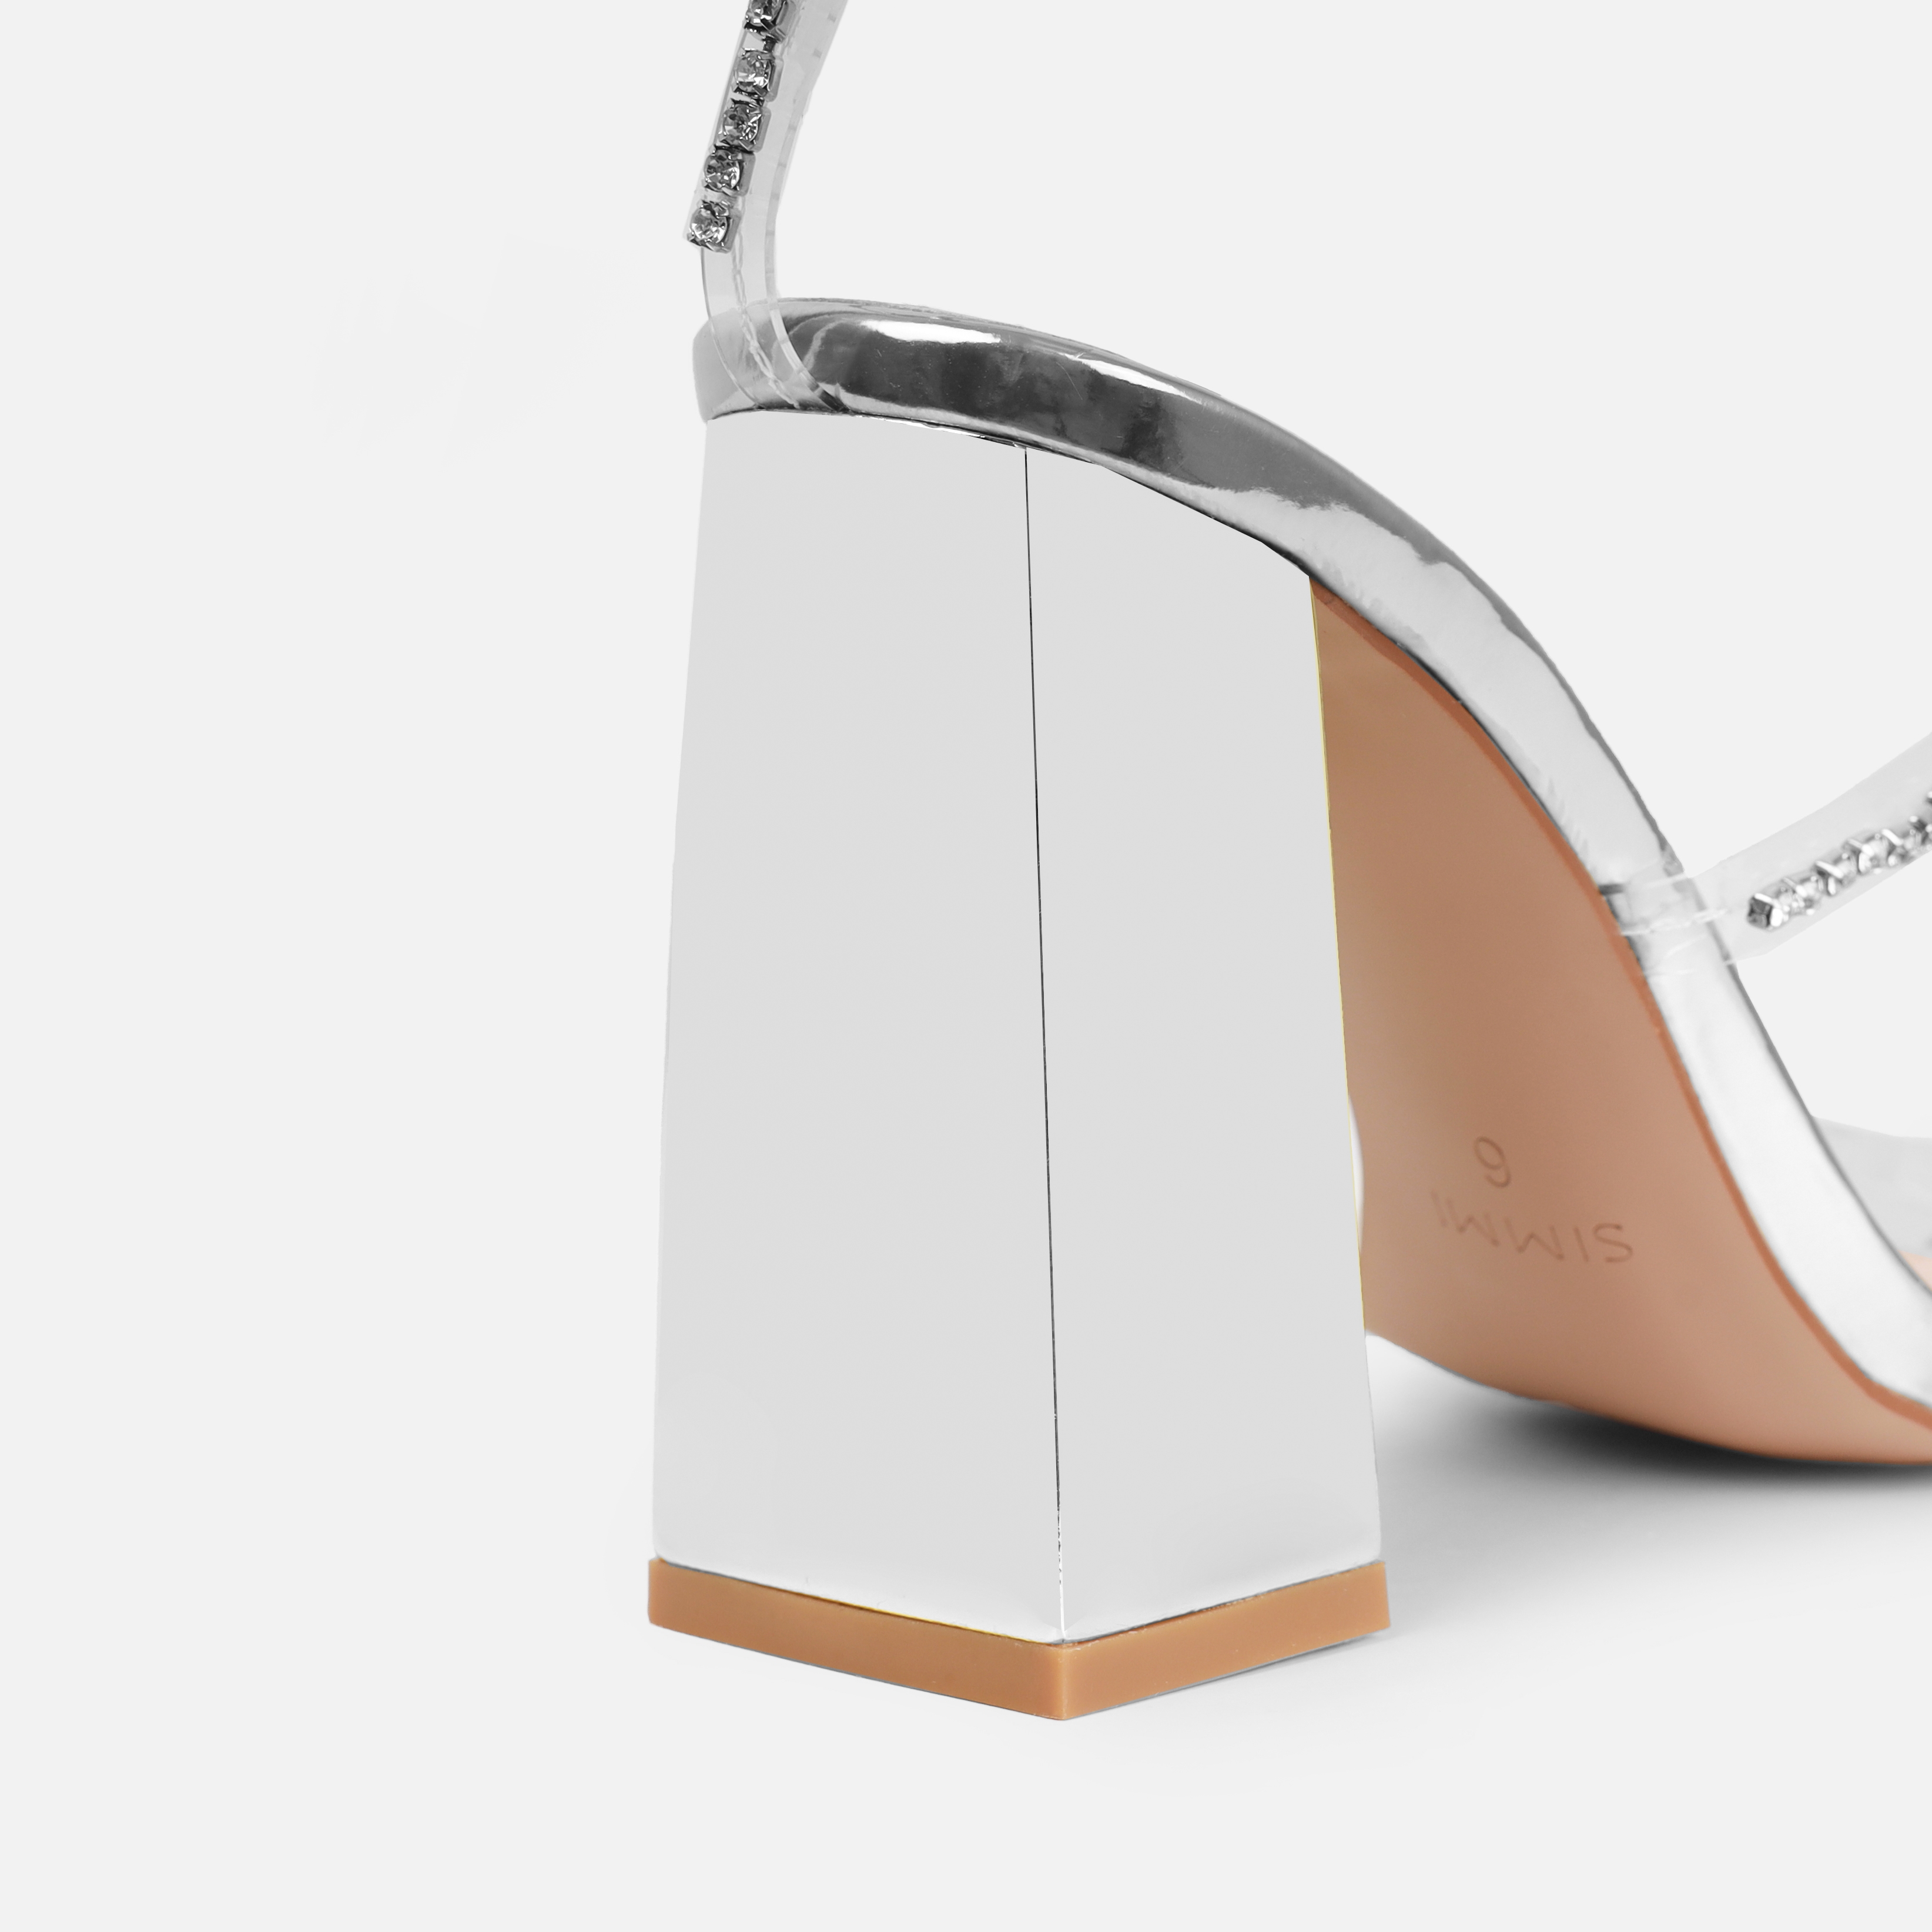 Silver Diamanté Embellished Mid Block Heel Sandals | New Look